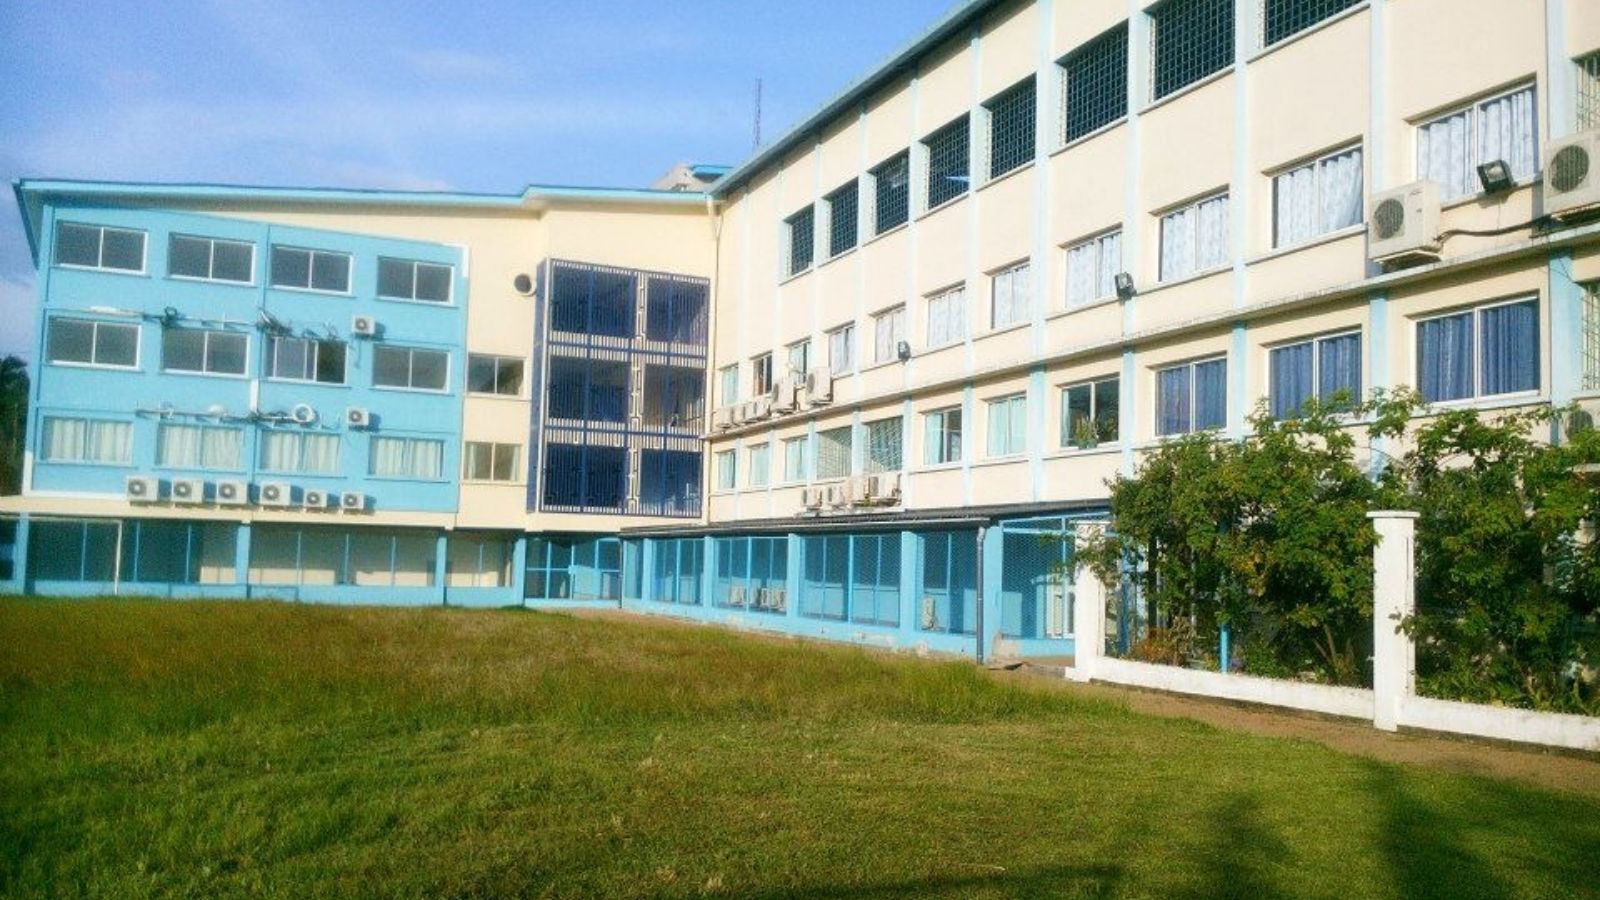 The American School of Douala